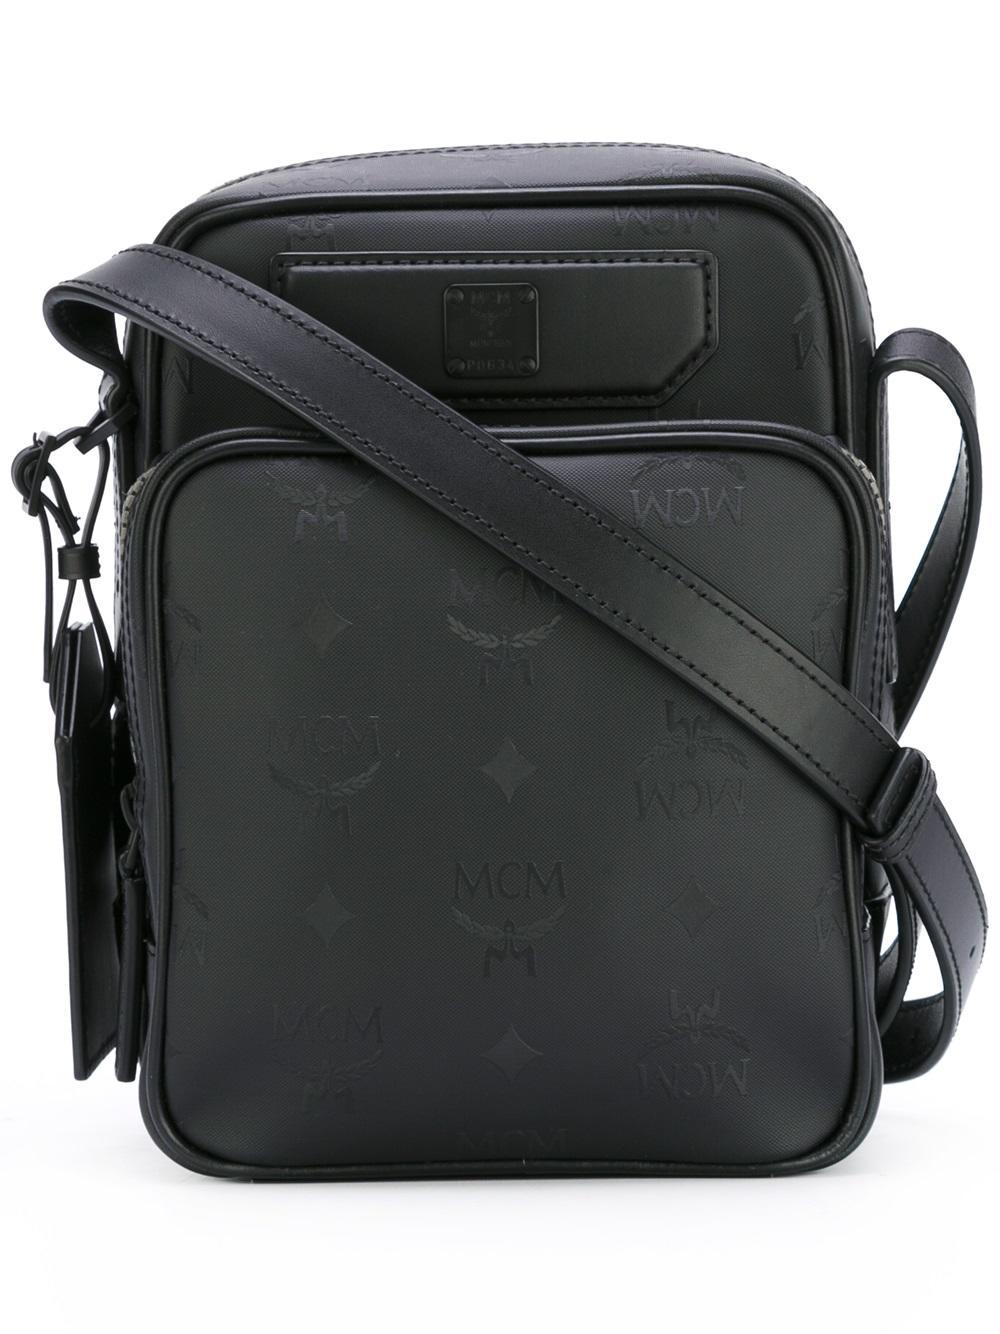 MCM Leather Logo Embossed Messenger Bag in Black for Men - Lyst